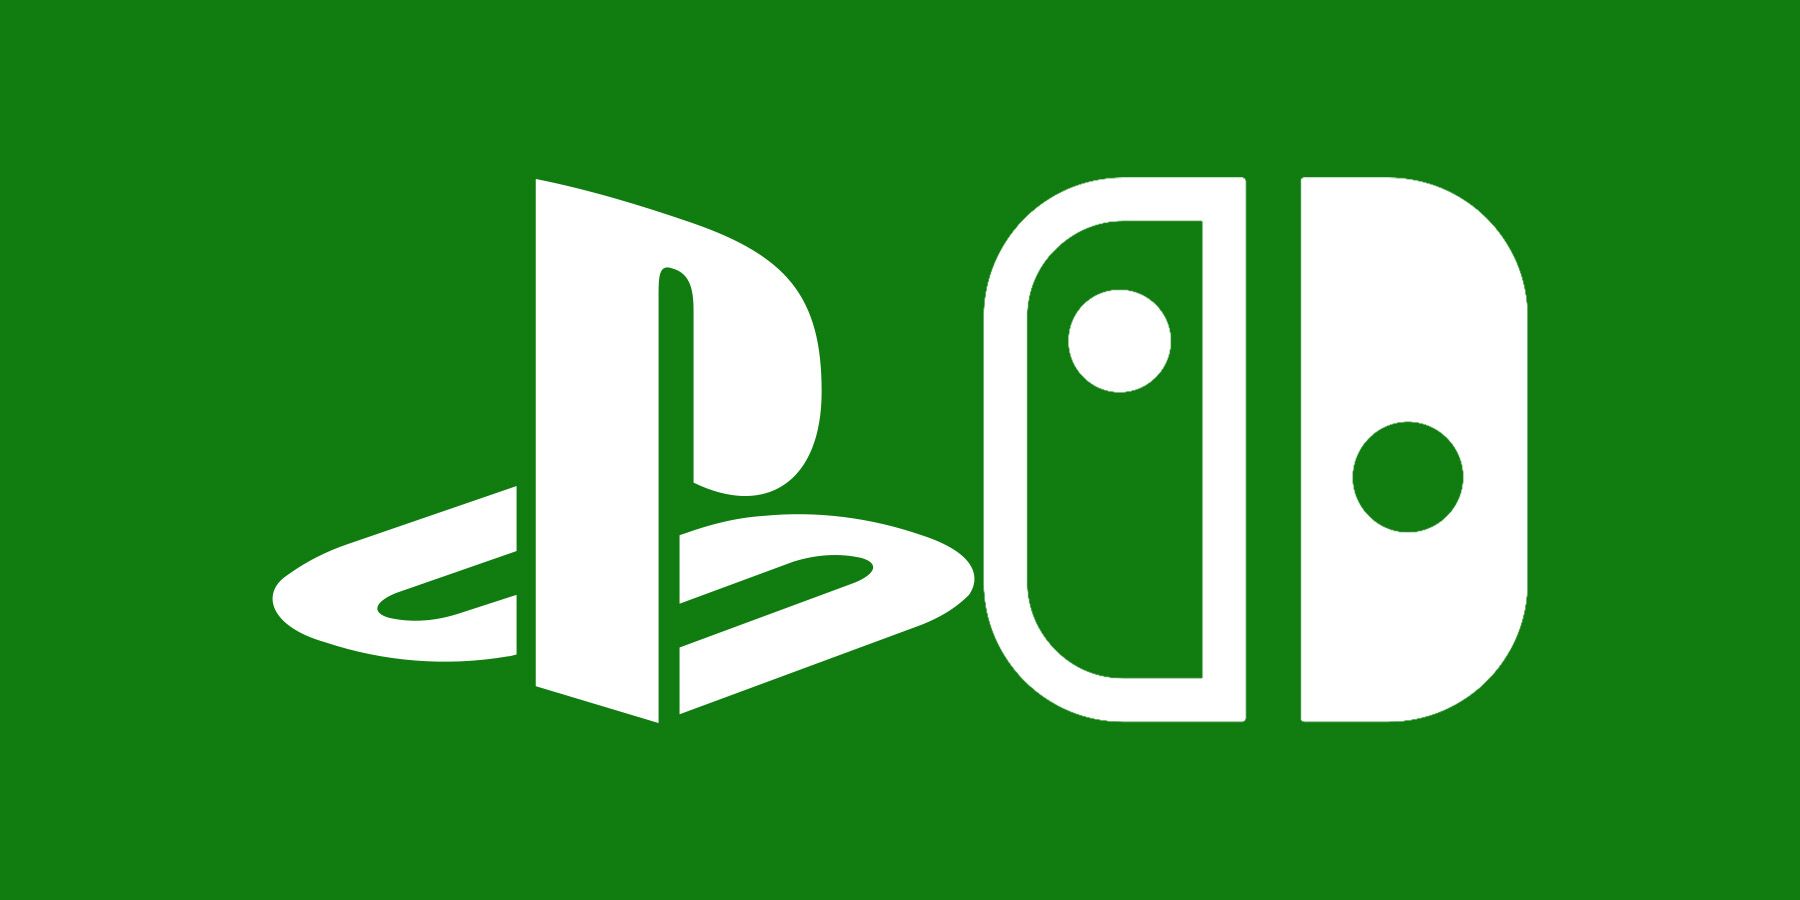 White Sony PlayStation Nintendo Switch logo submarks on Xbox green background